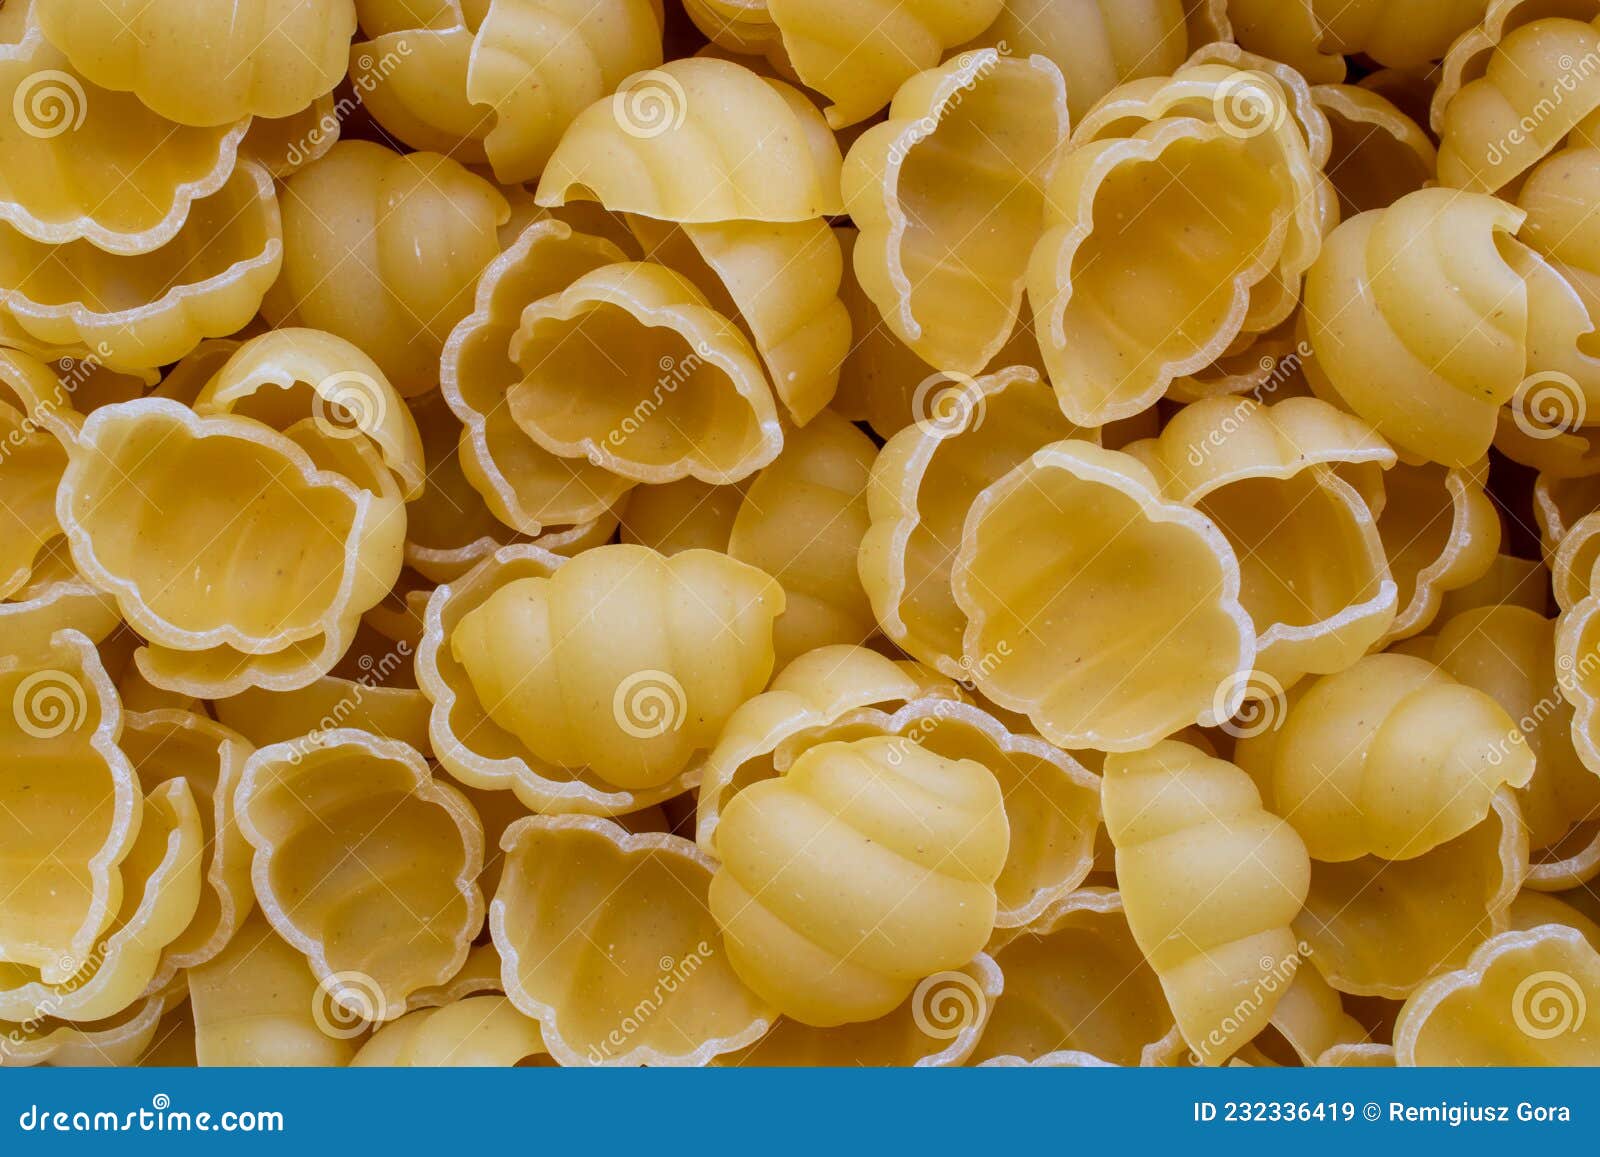 shell pasta, macro photo on tapete